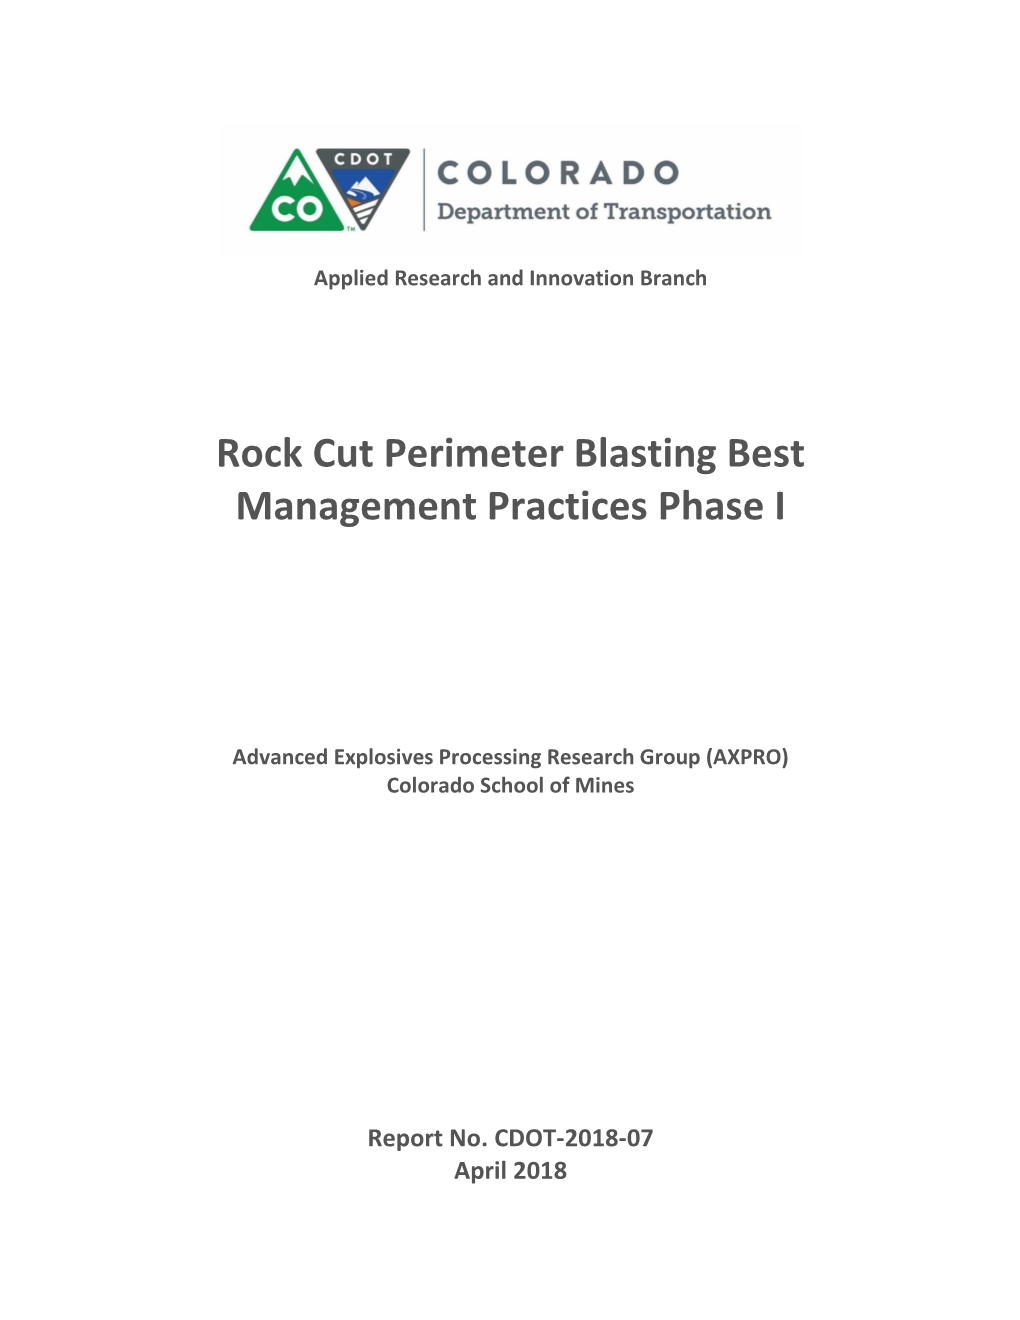 Rock Cut Perimeter Blasting Best Management Practices Phase I